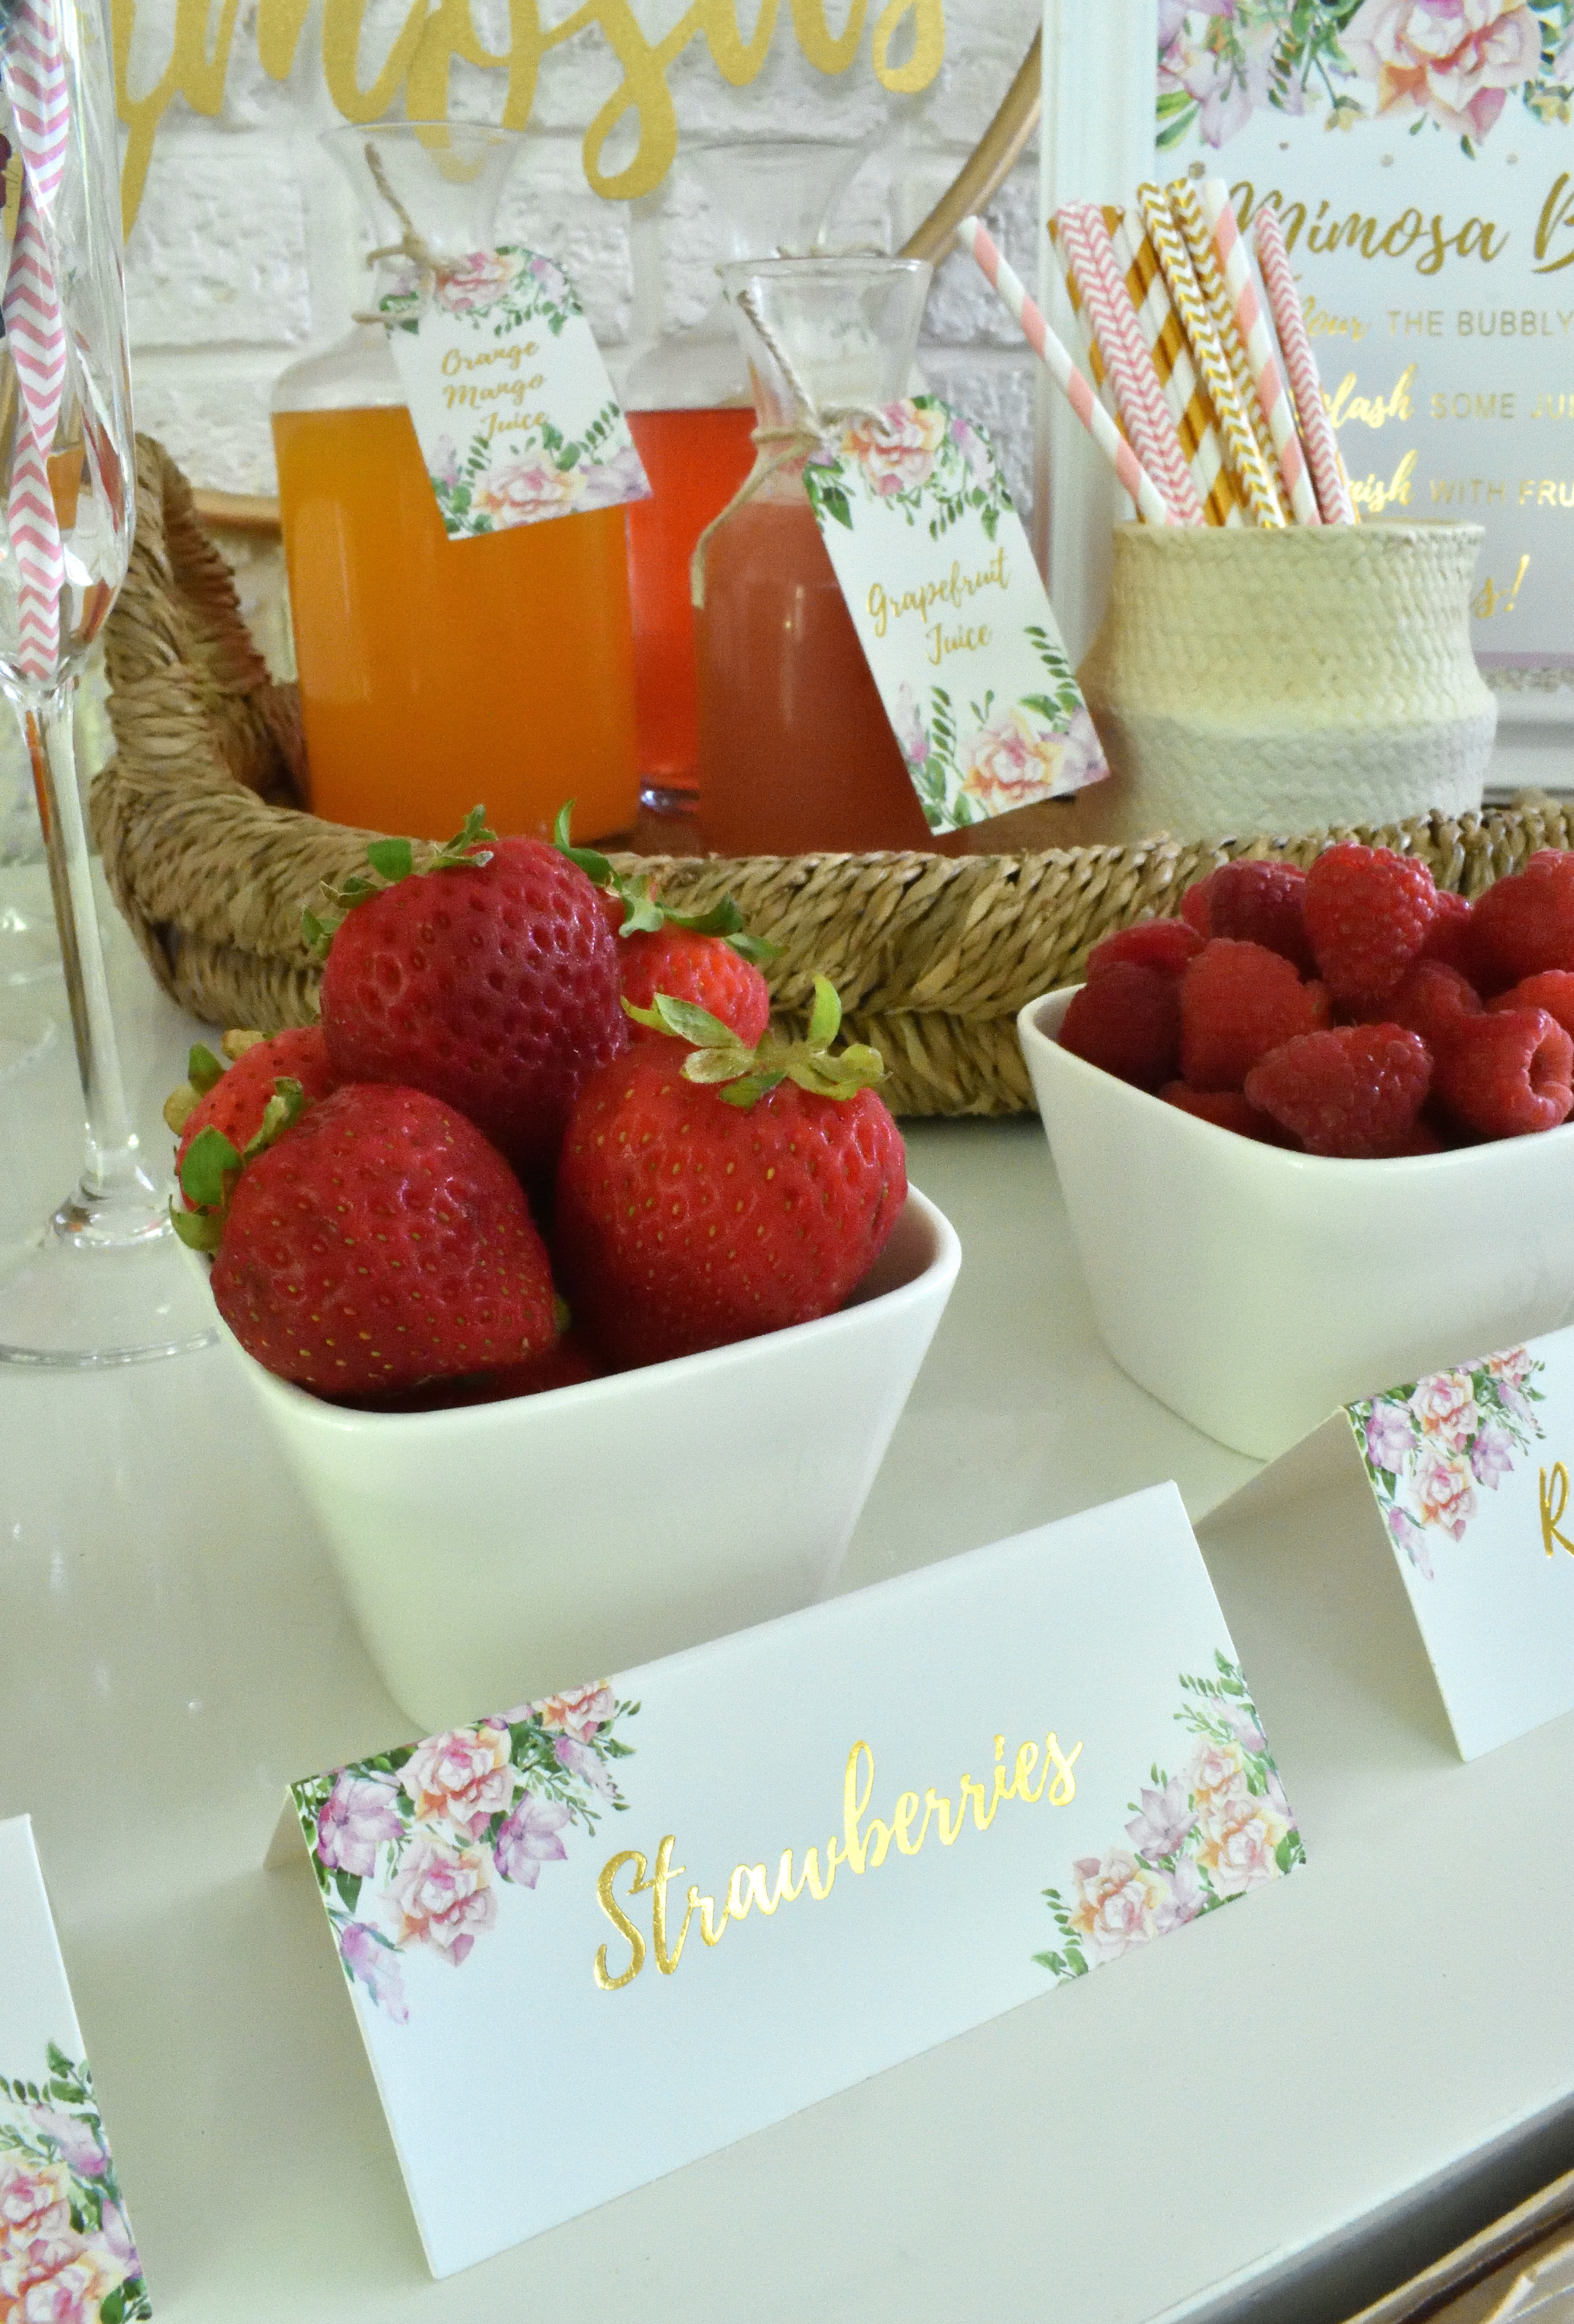 DIY: Mimosa Bar Styling Ideas and Recipes - Shari's Berries Blog